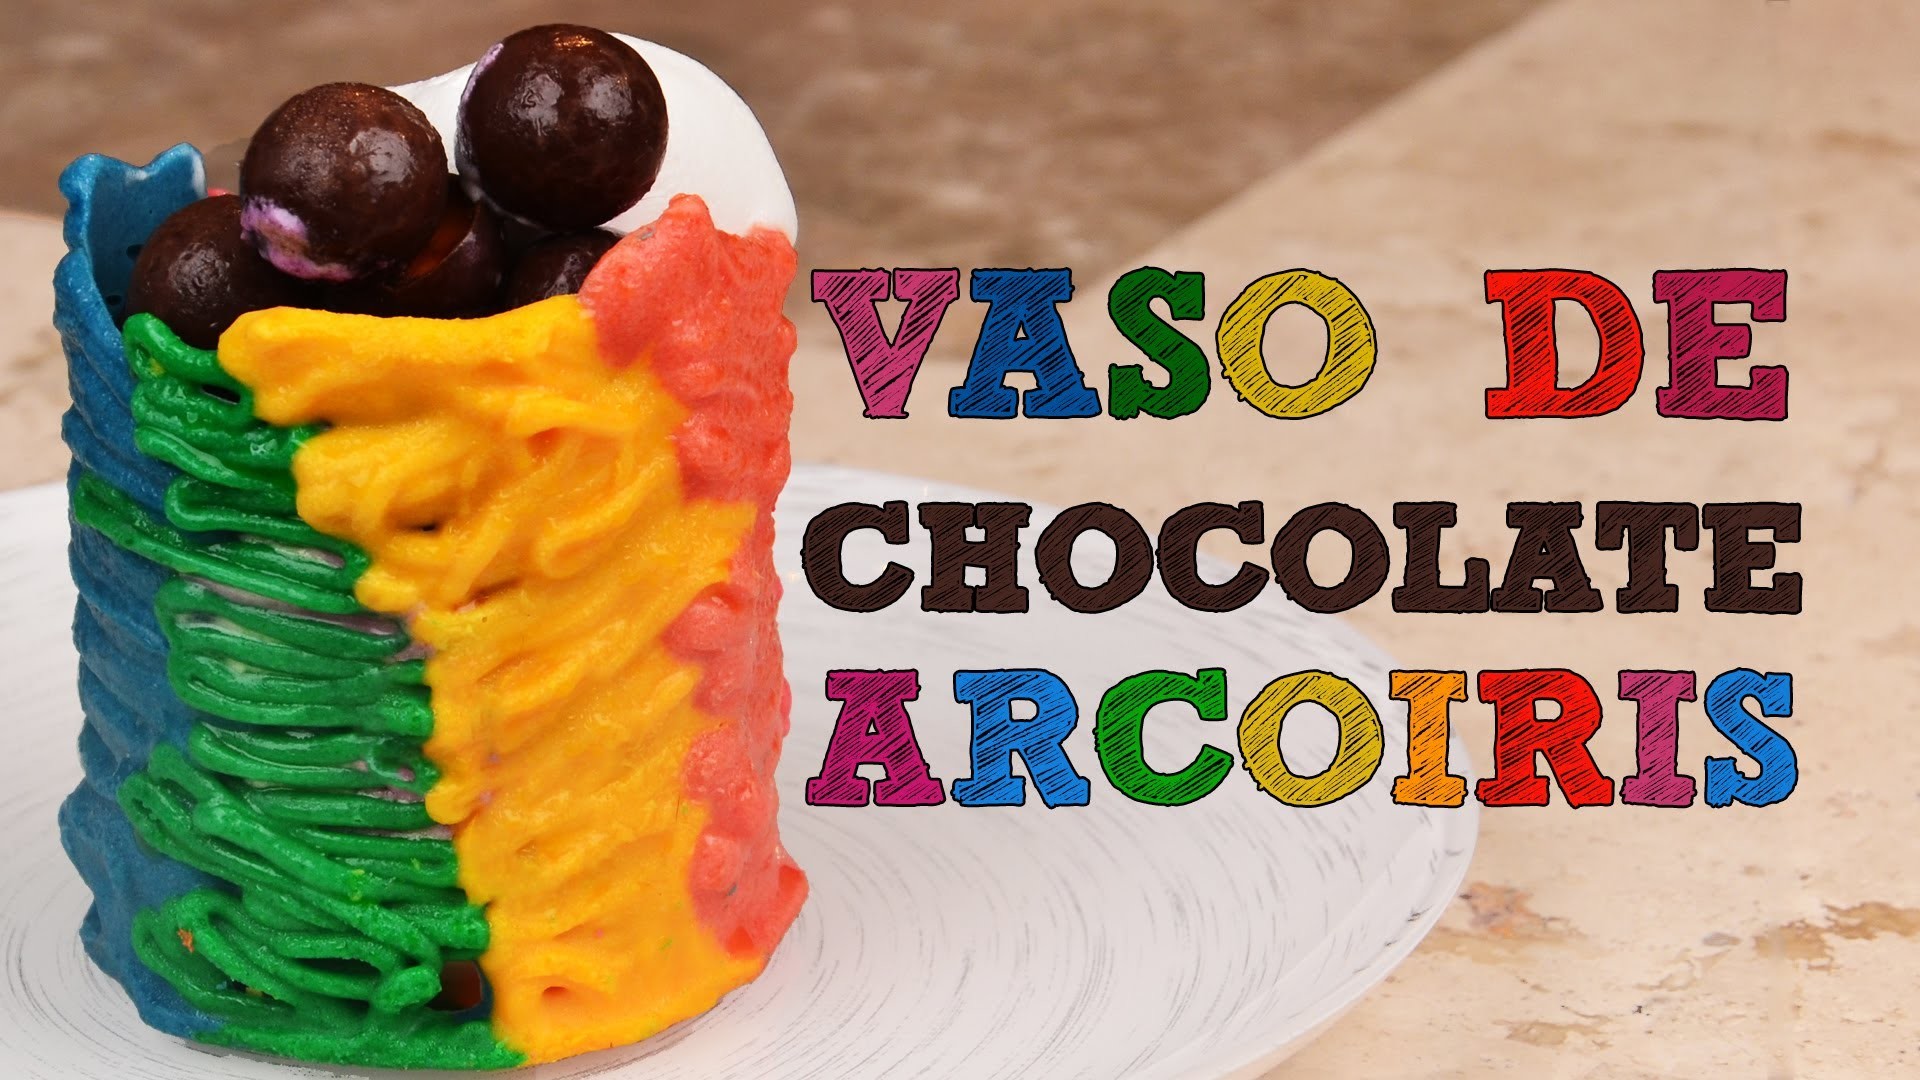 Vasos de CHOCOLATE ARCOIRIS FÁCIL | Recetas fáciles de postres | Vasos de chocolate rainbow